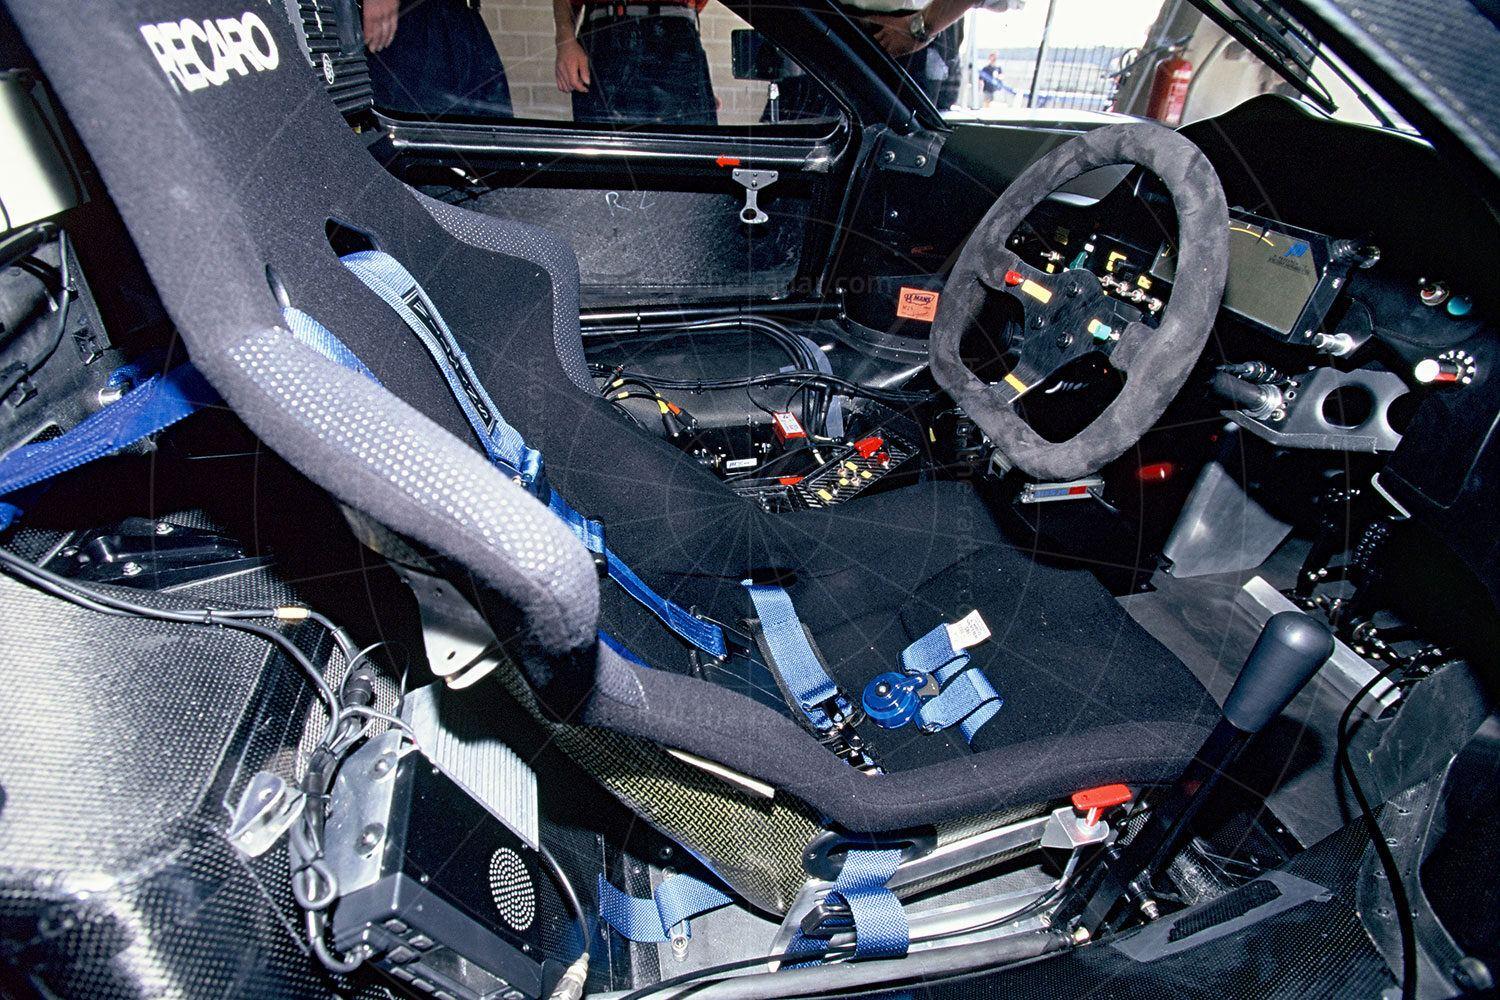 Nissan R390 racer Pic: Nissan | Nissan R390 racer interior